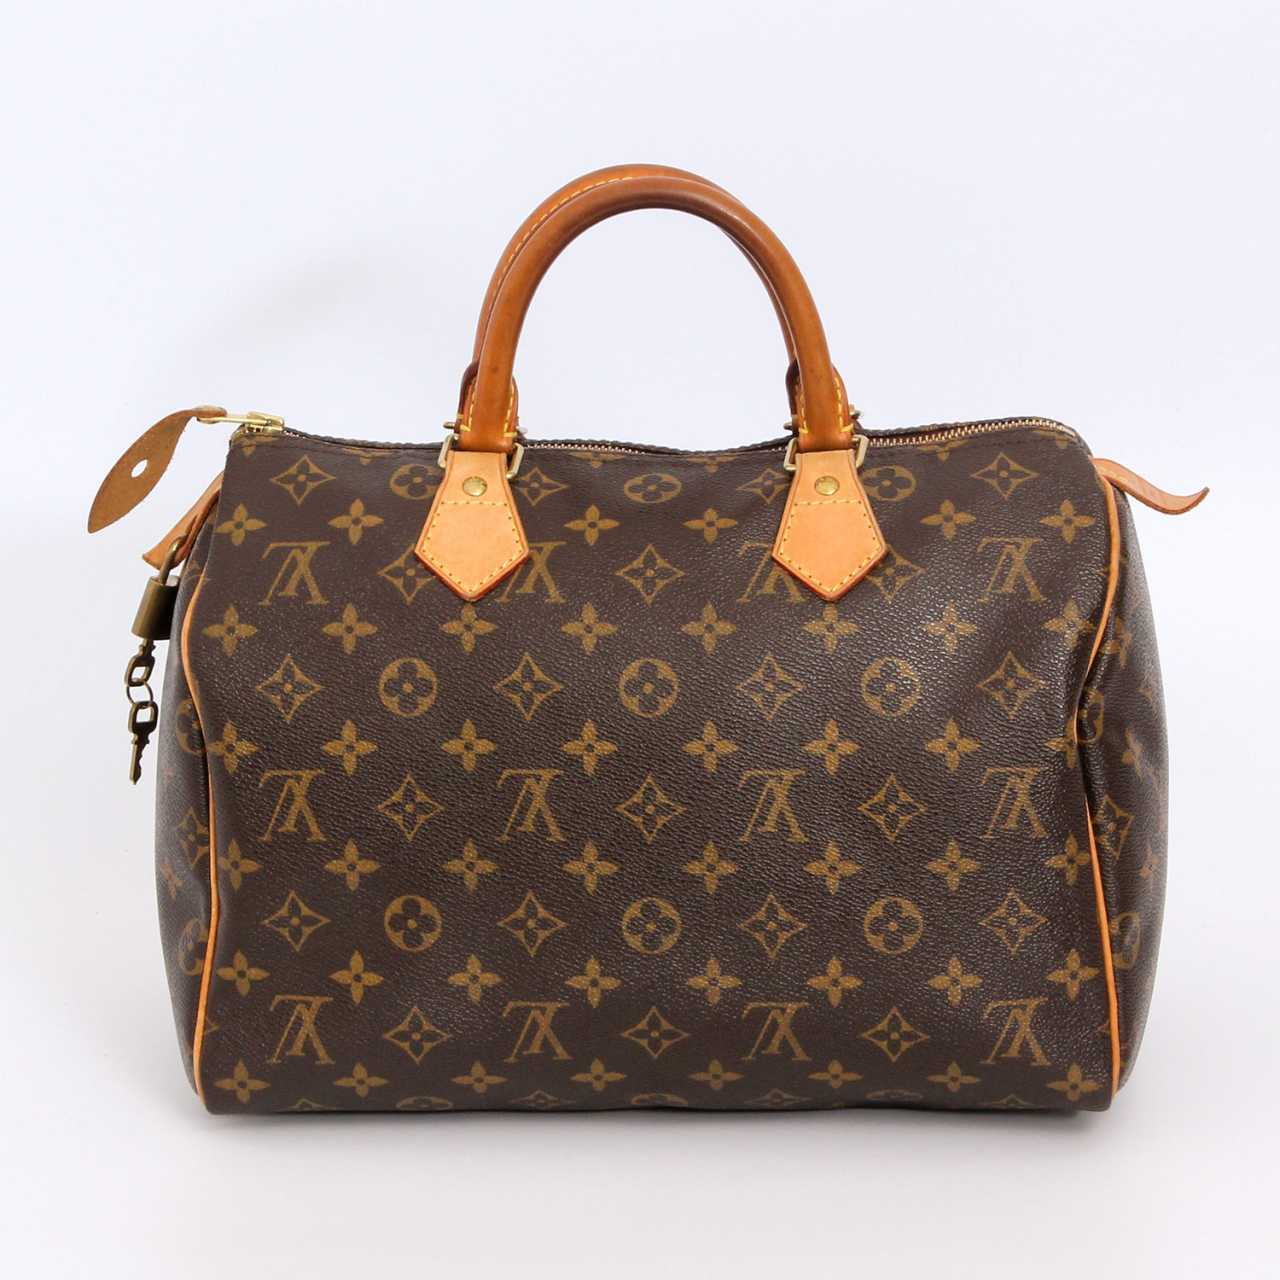 Louis Vuitton Handbag Price Increase Synonym Paul Smith